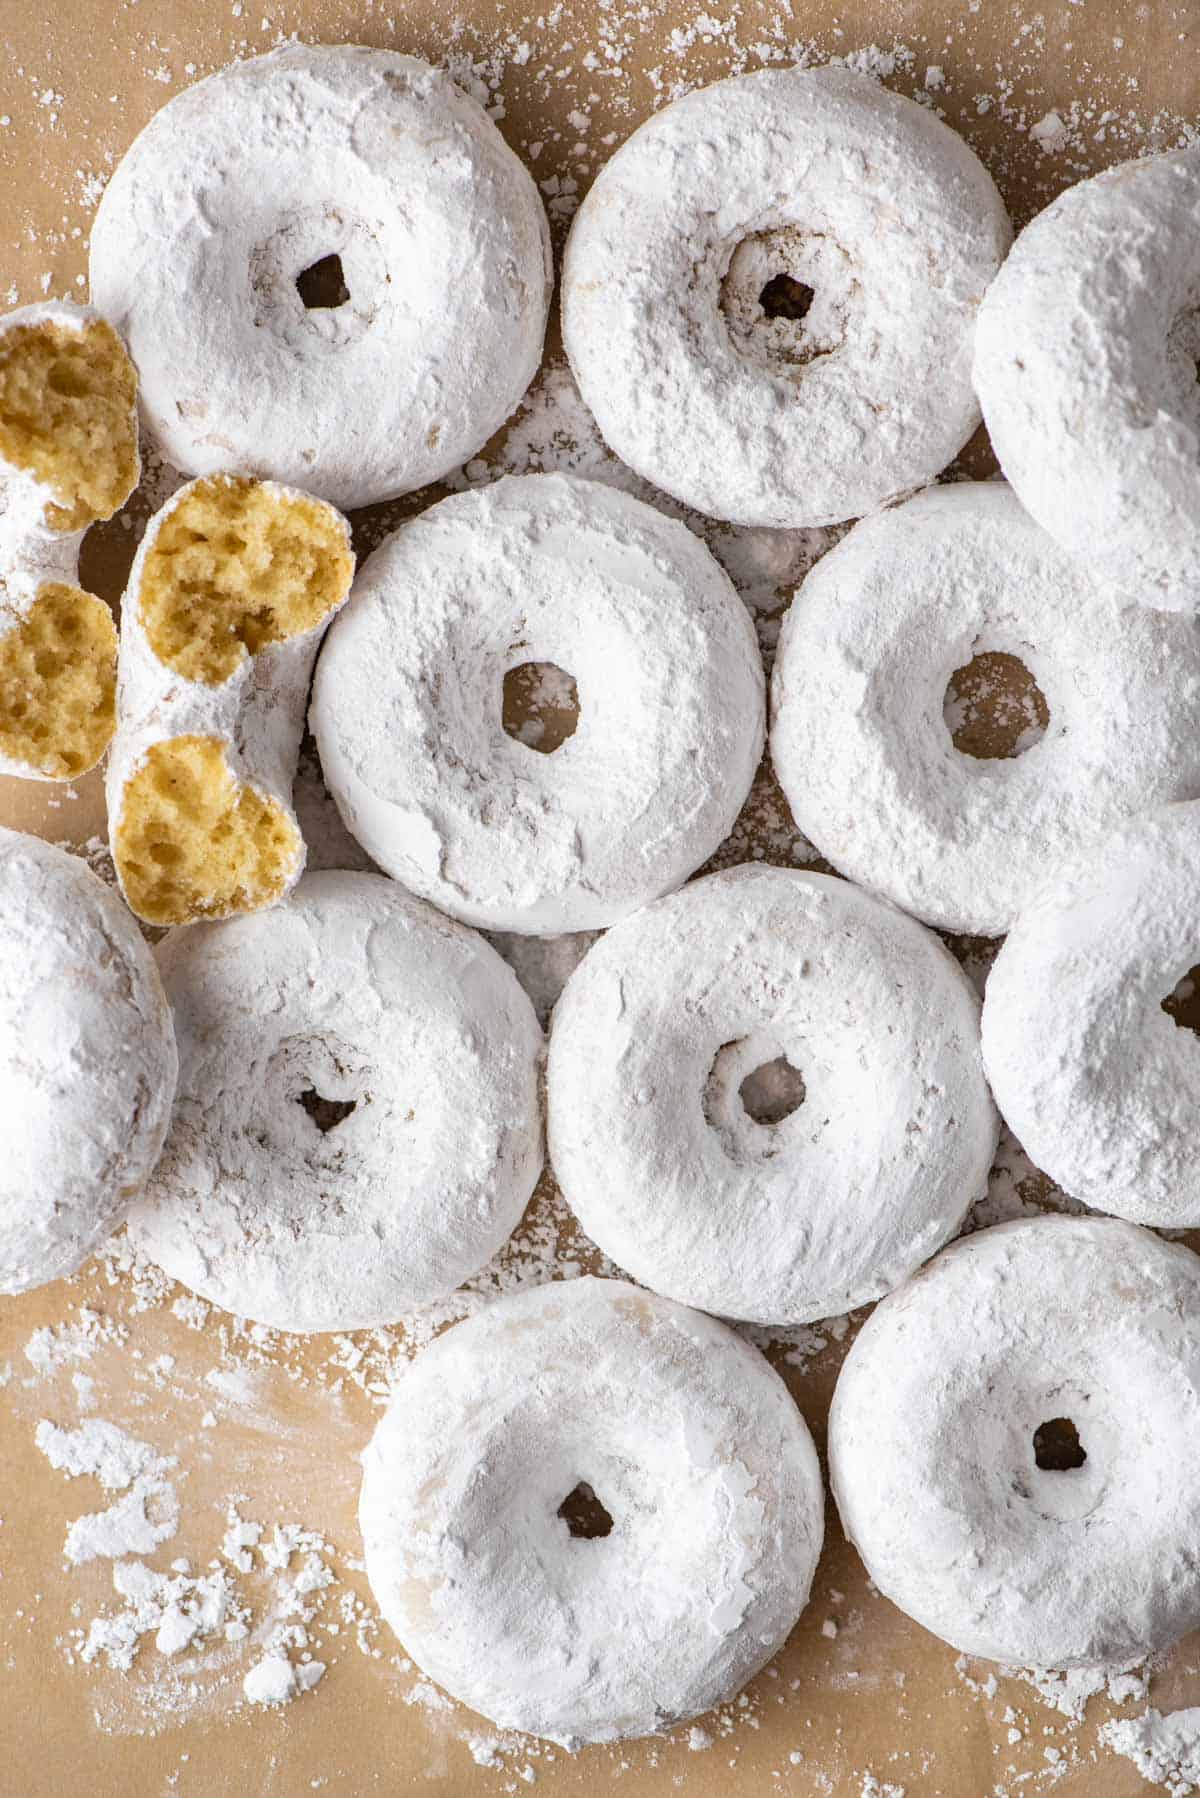 powdered sugar donuts arranged in pattern